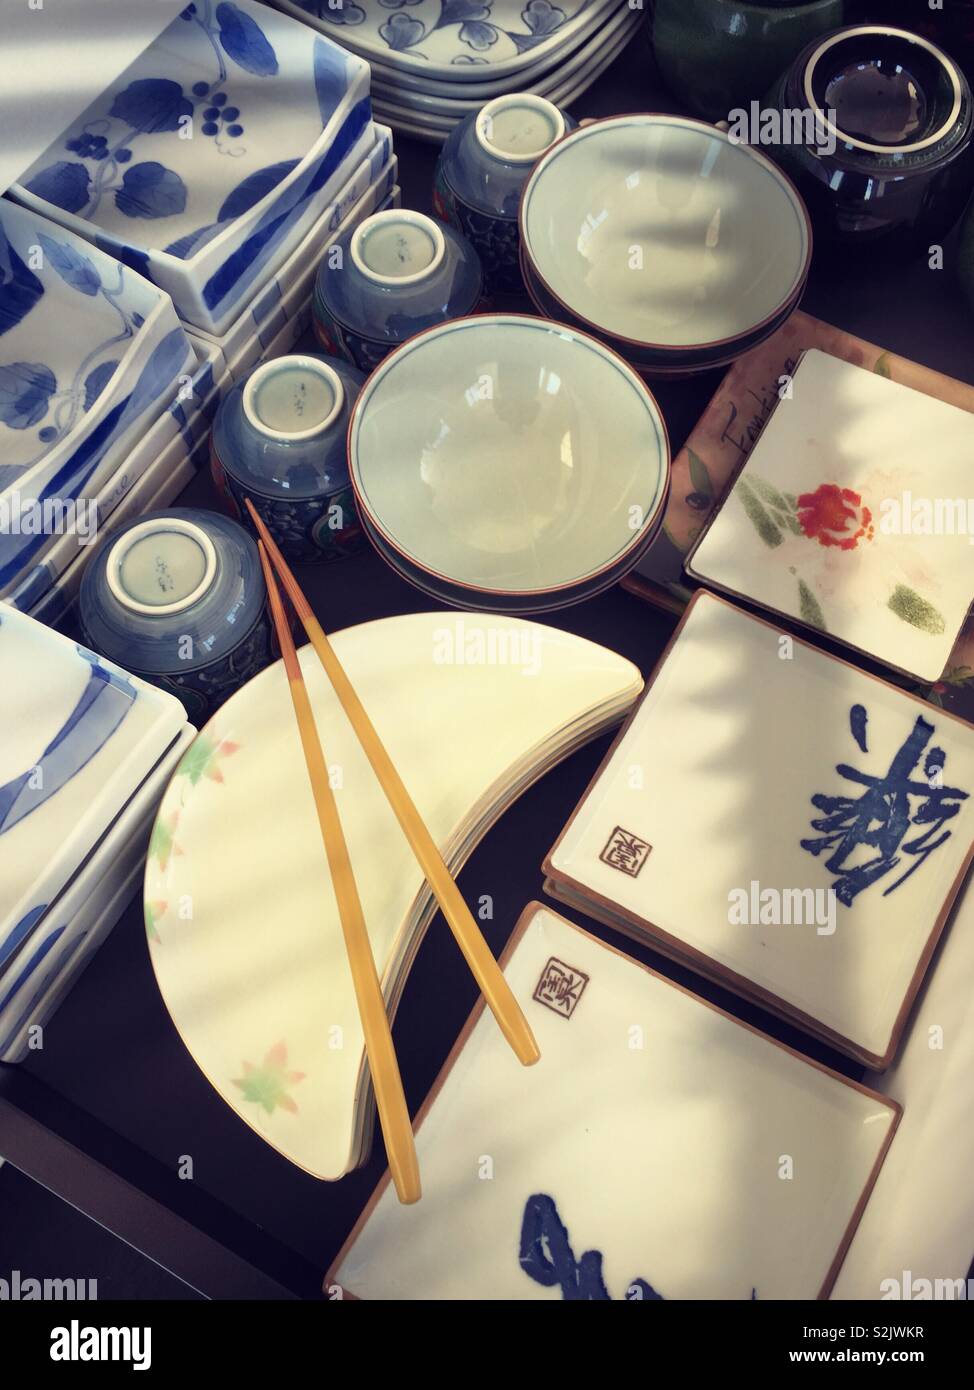 Ceramic Utensils Plates Bowls On Fair Stock Photo 551353666